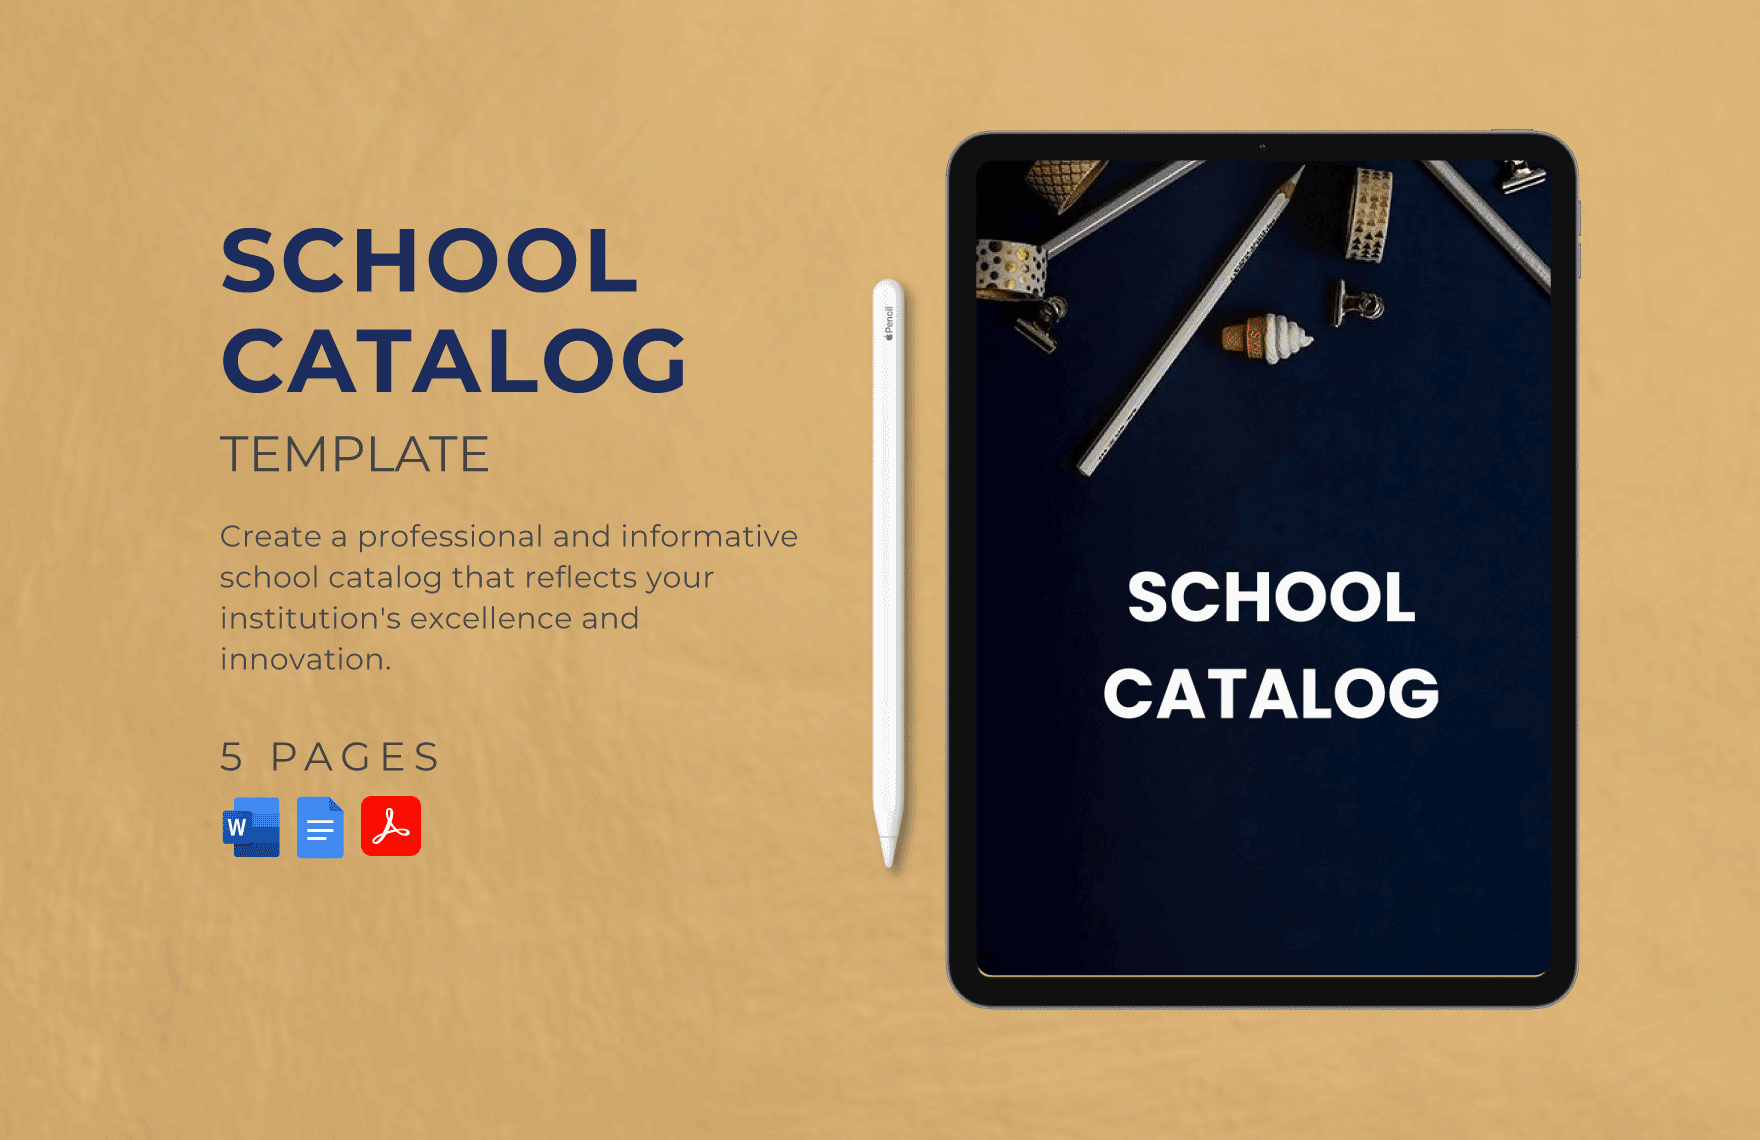 School Catalog Template